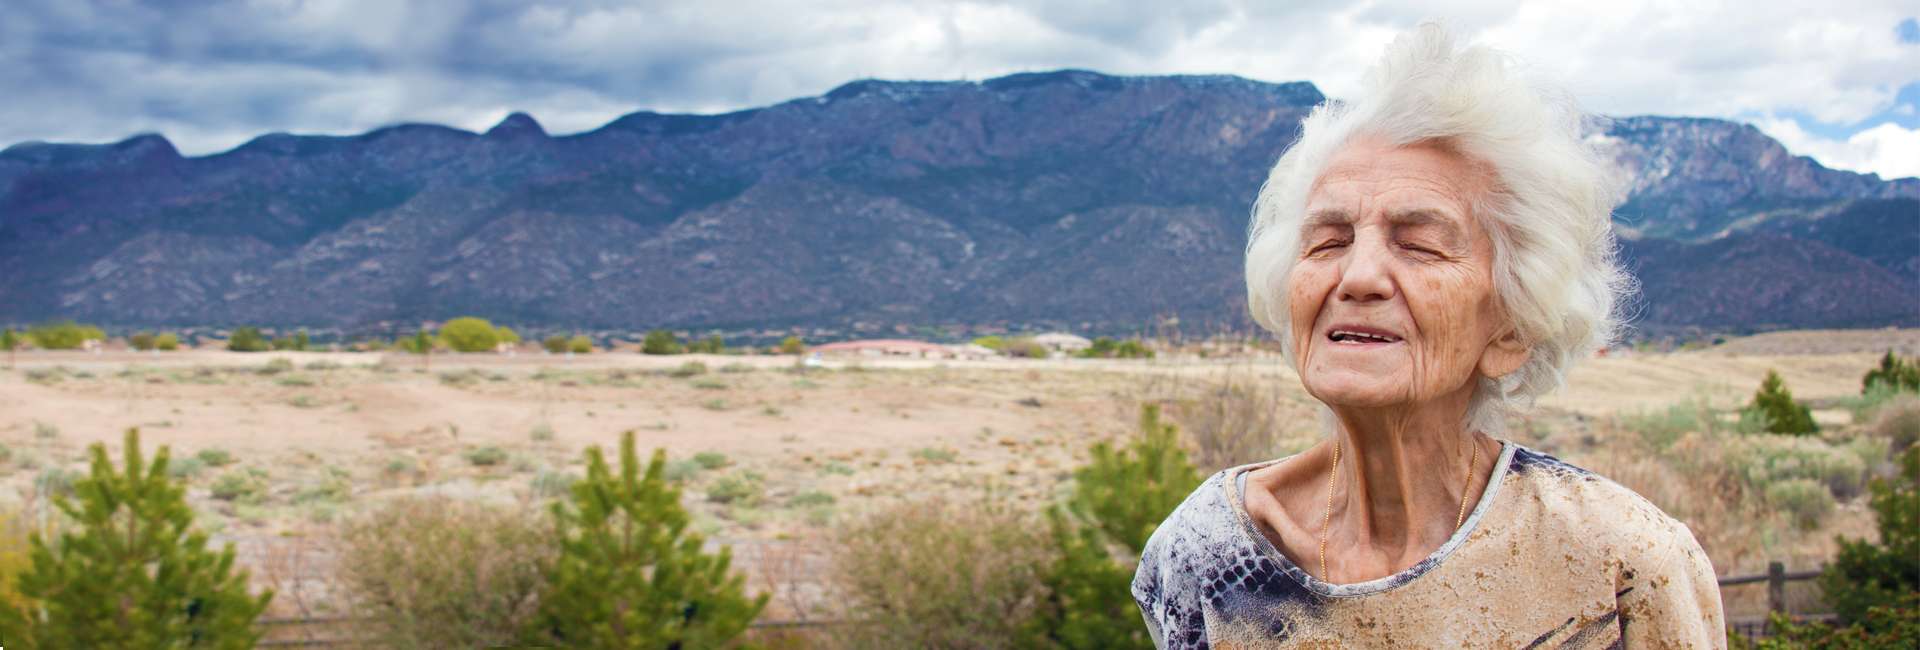 Older woman in the desert enjoying the breeze.